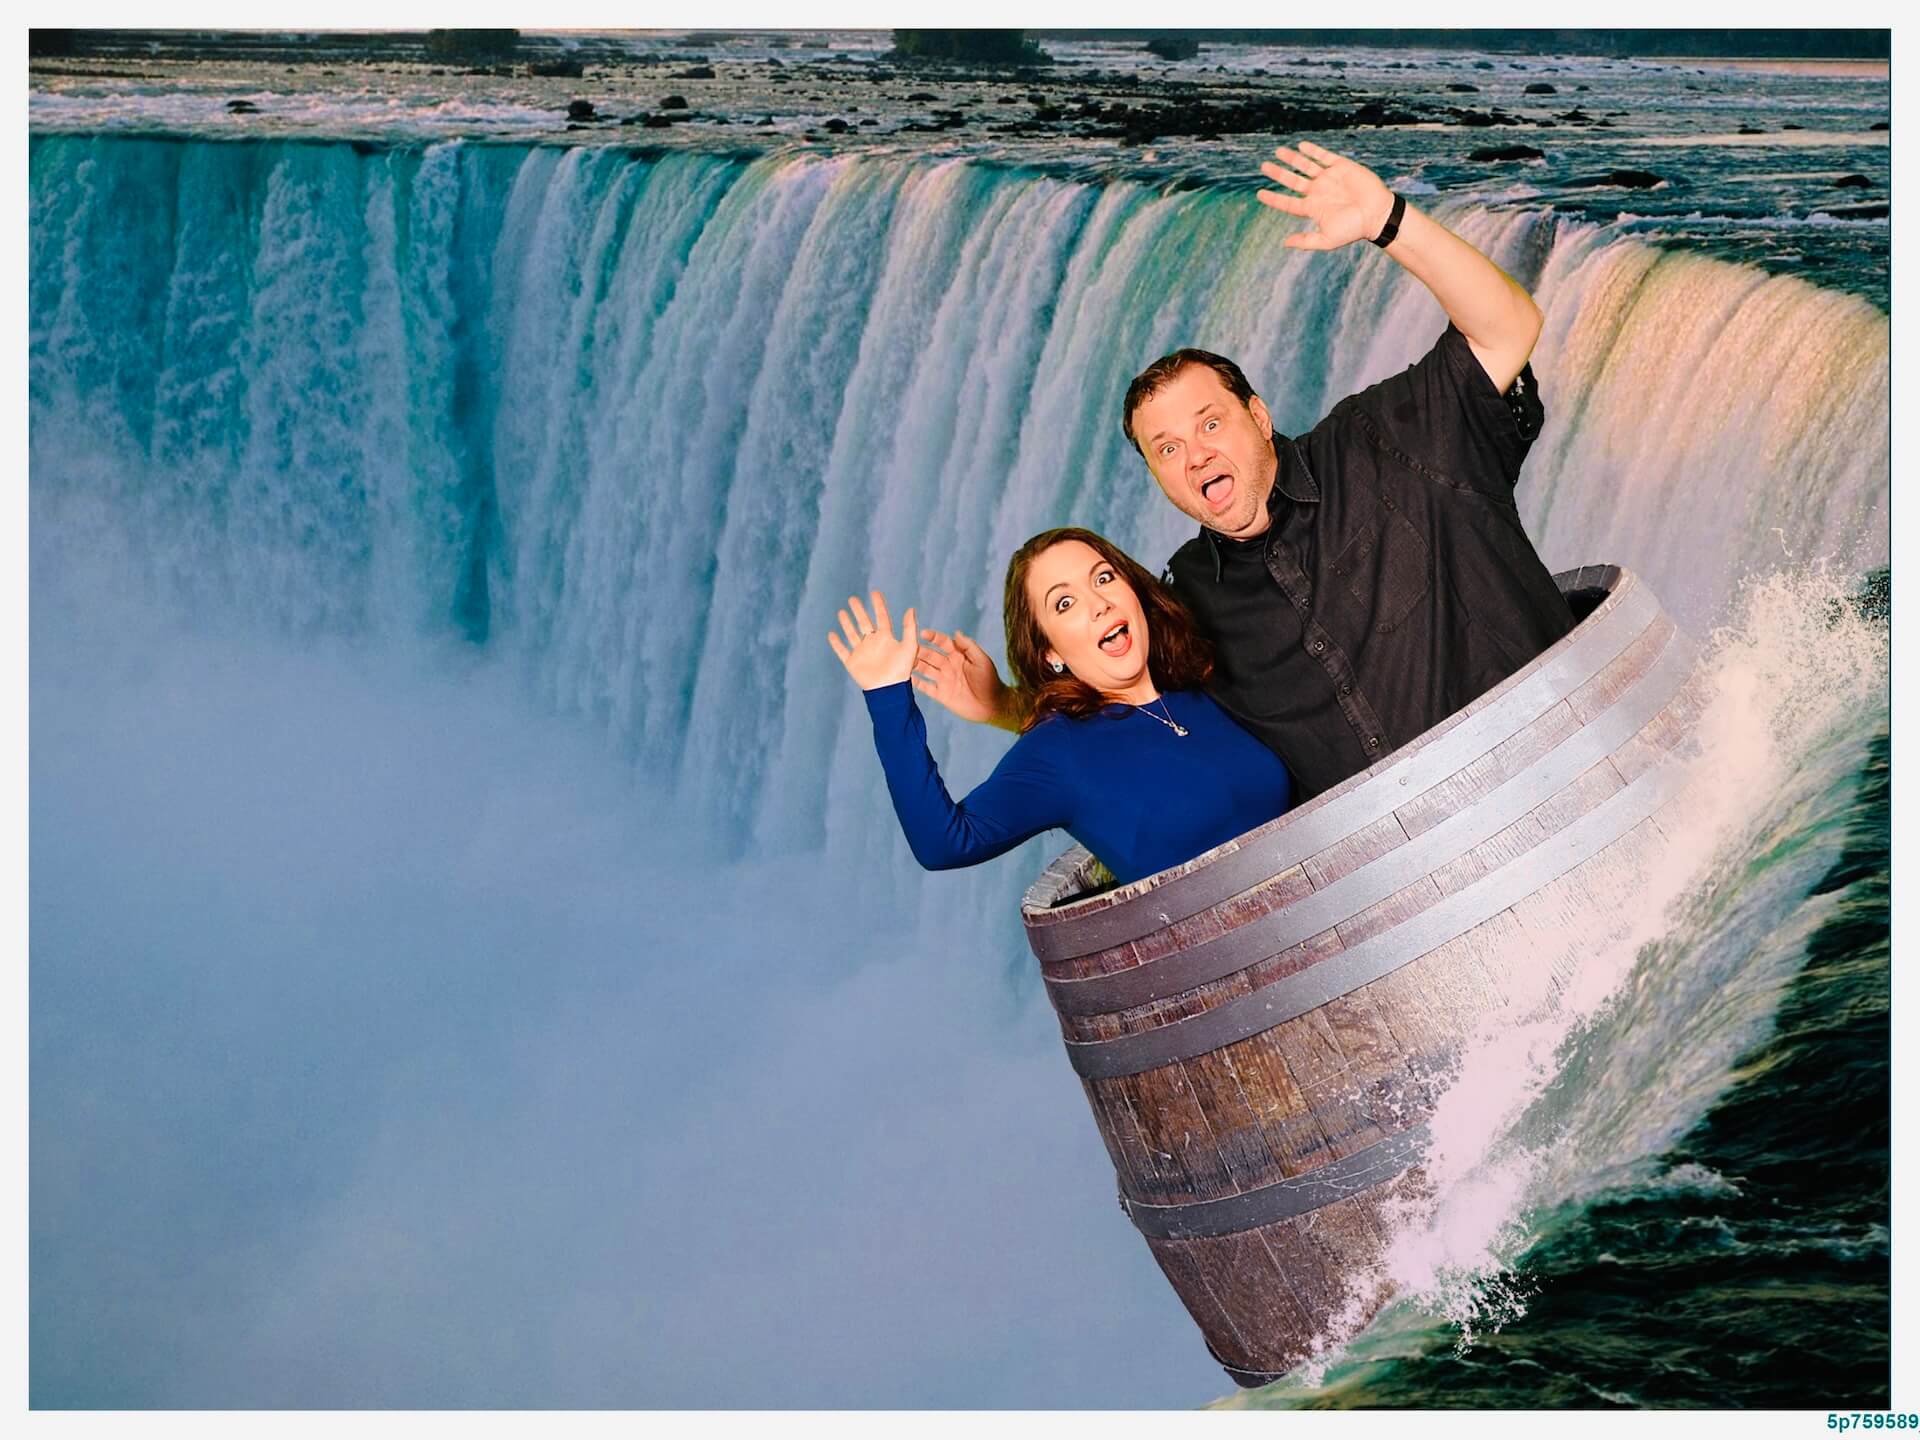 Niagara falls barrel